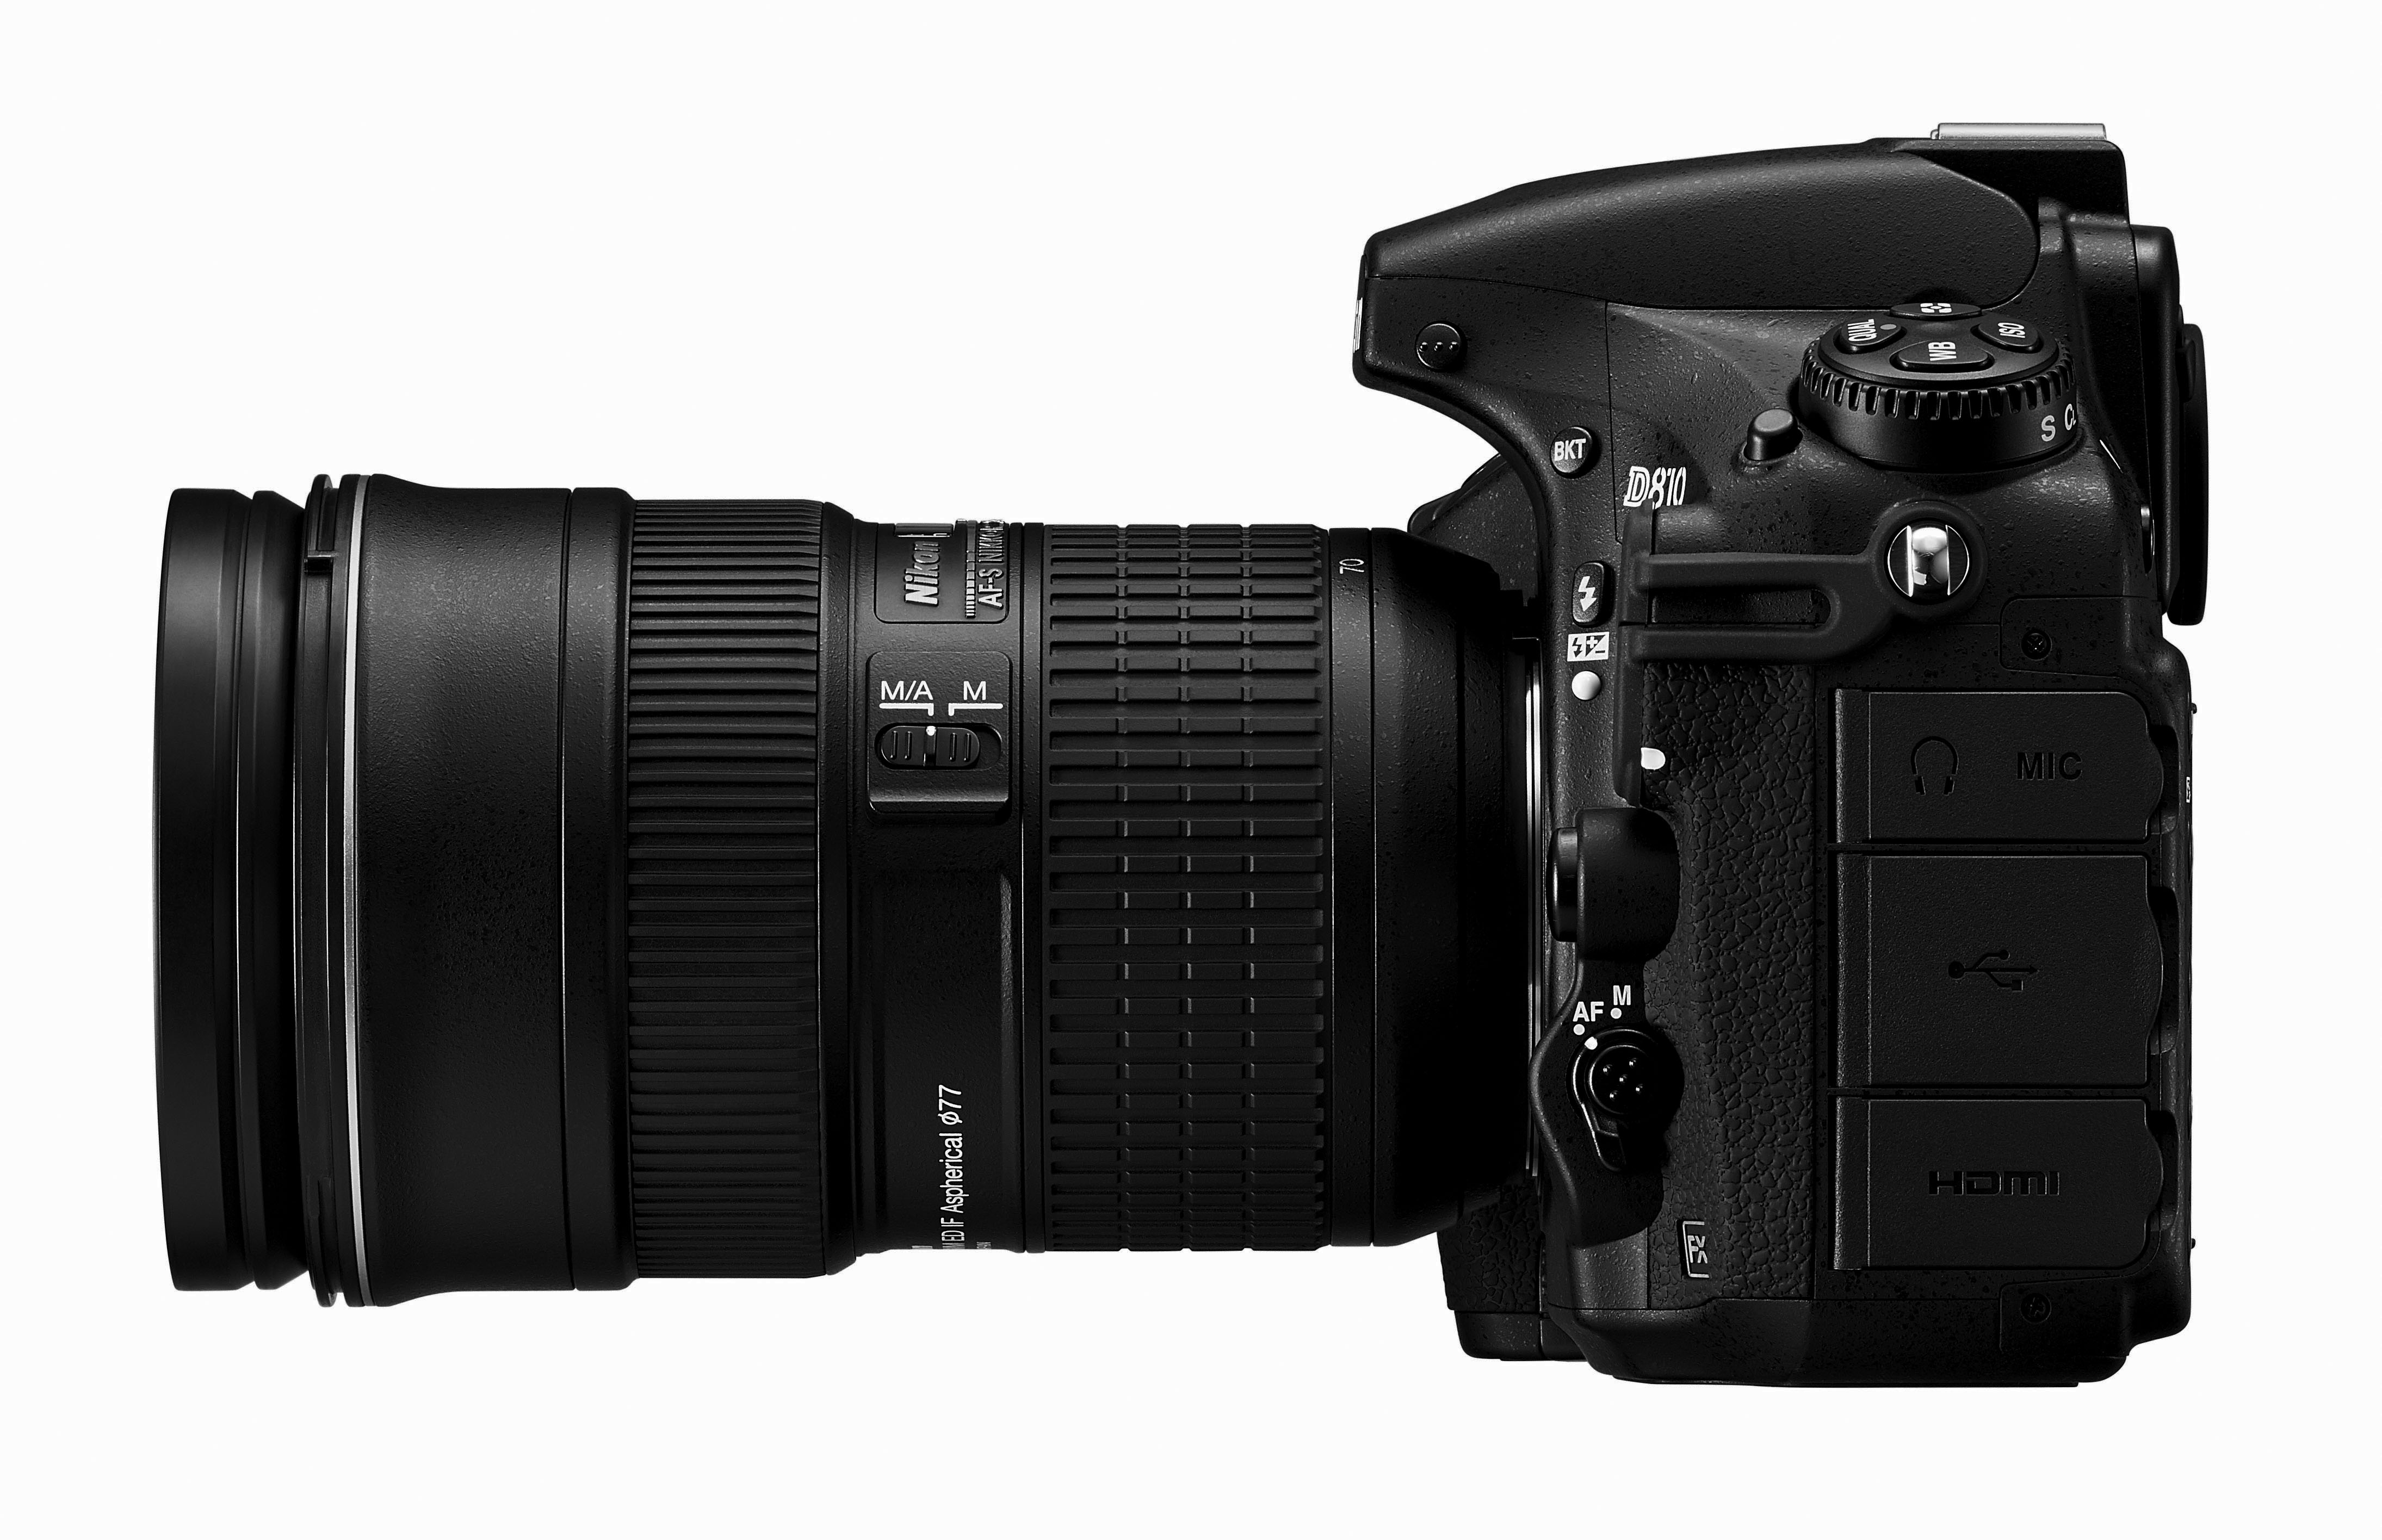 Nikon D810 DSLR camera available now for preorder at Adorama